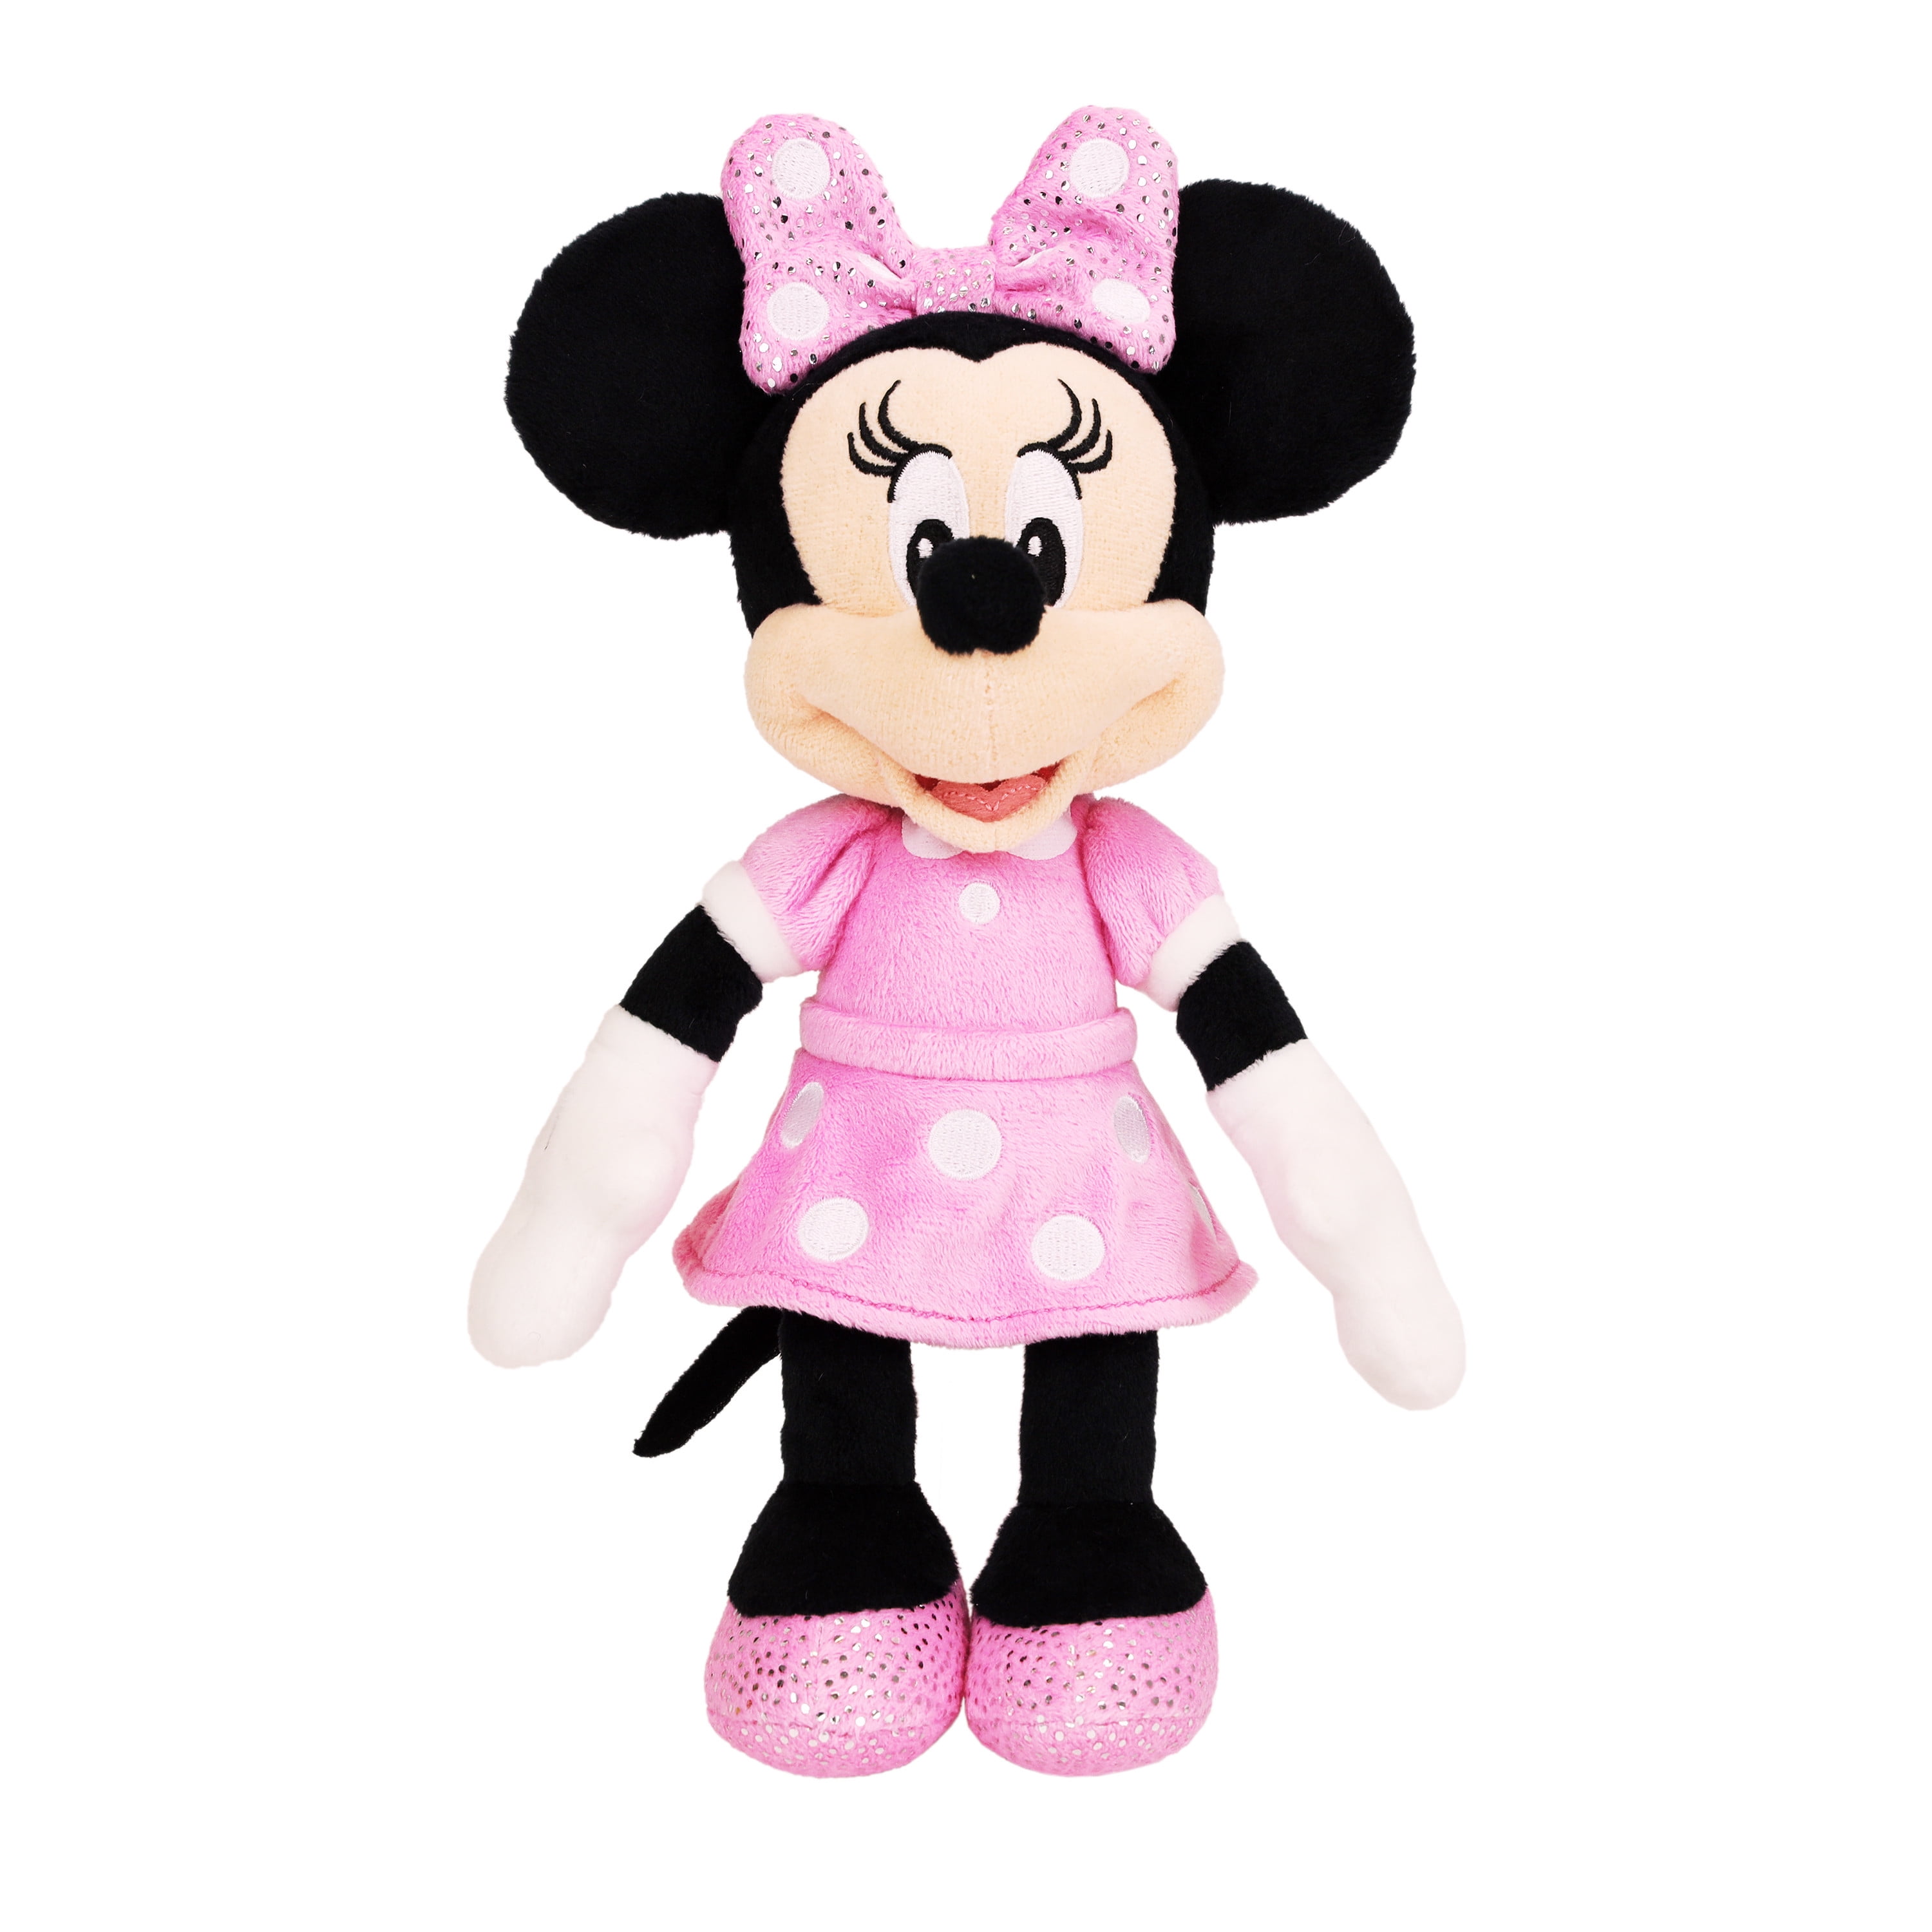 Minnie Mouse Dancing Personalized 3 Piece Bath Towel Set Your Color Choice 